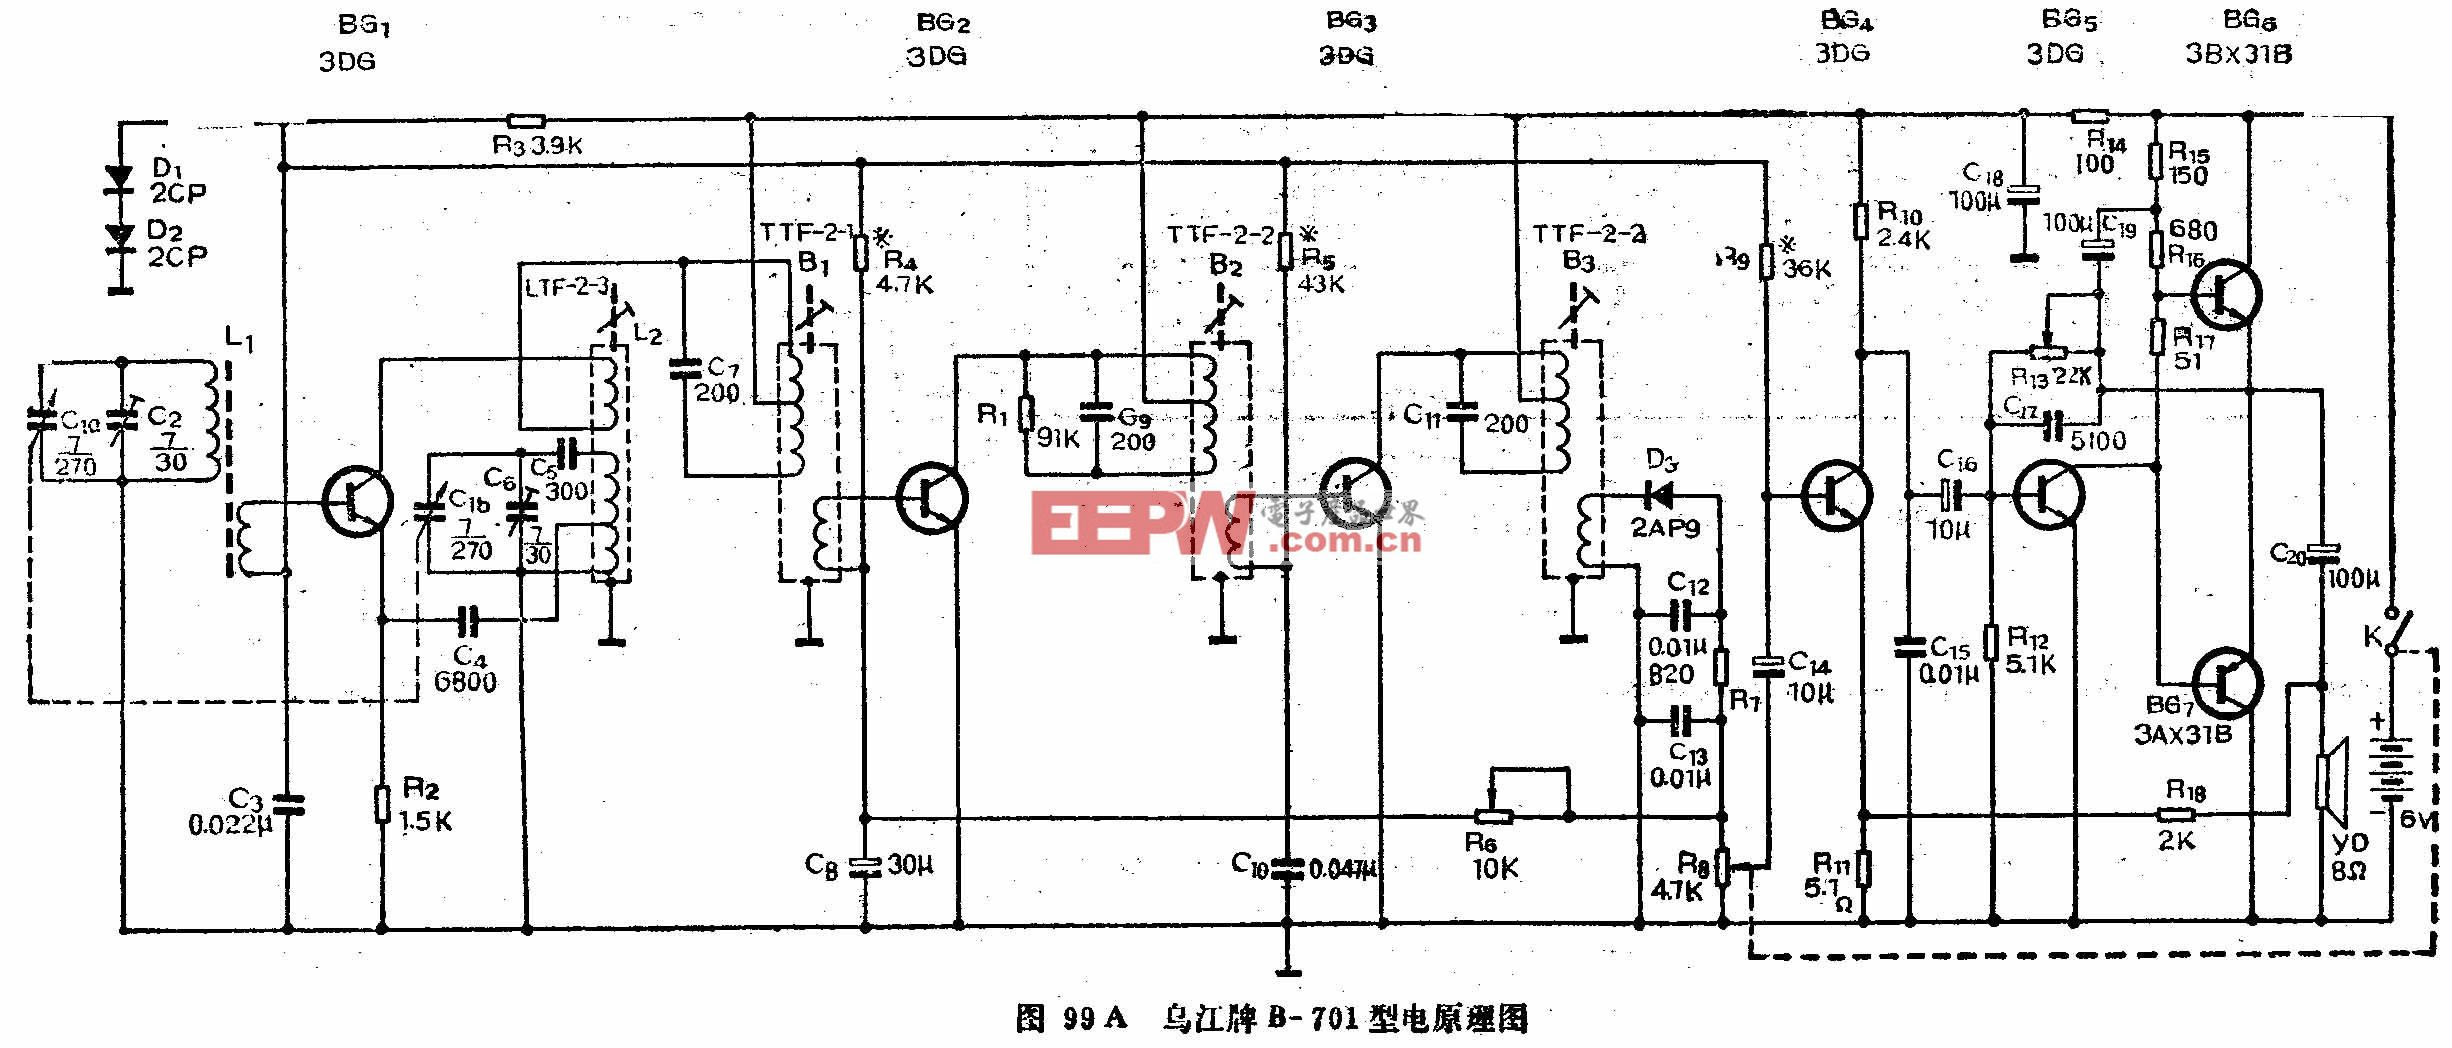 Lonchin 3050c Atv 50cc Wiring Diagram